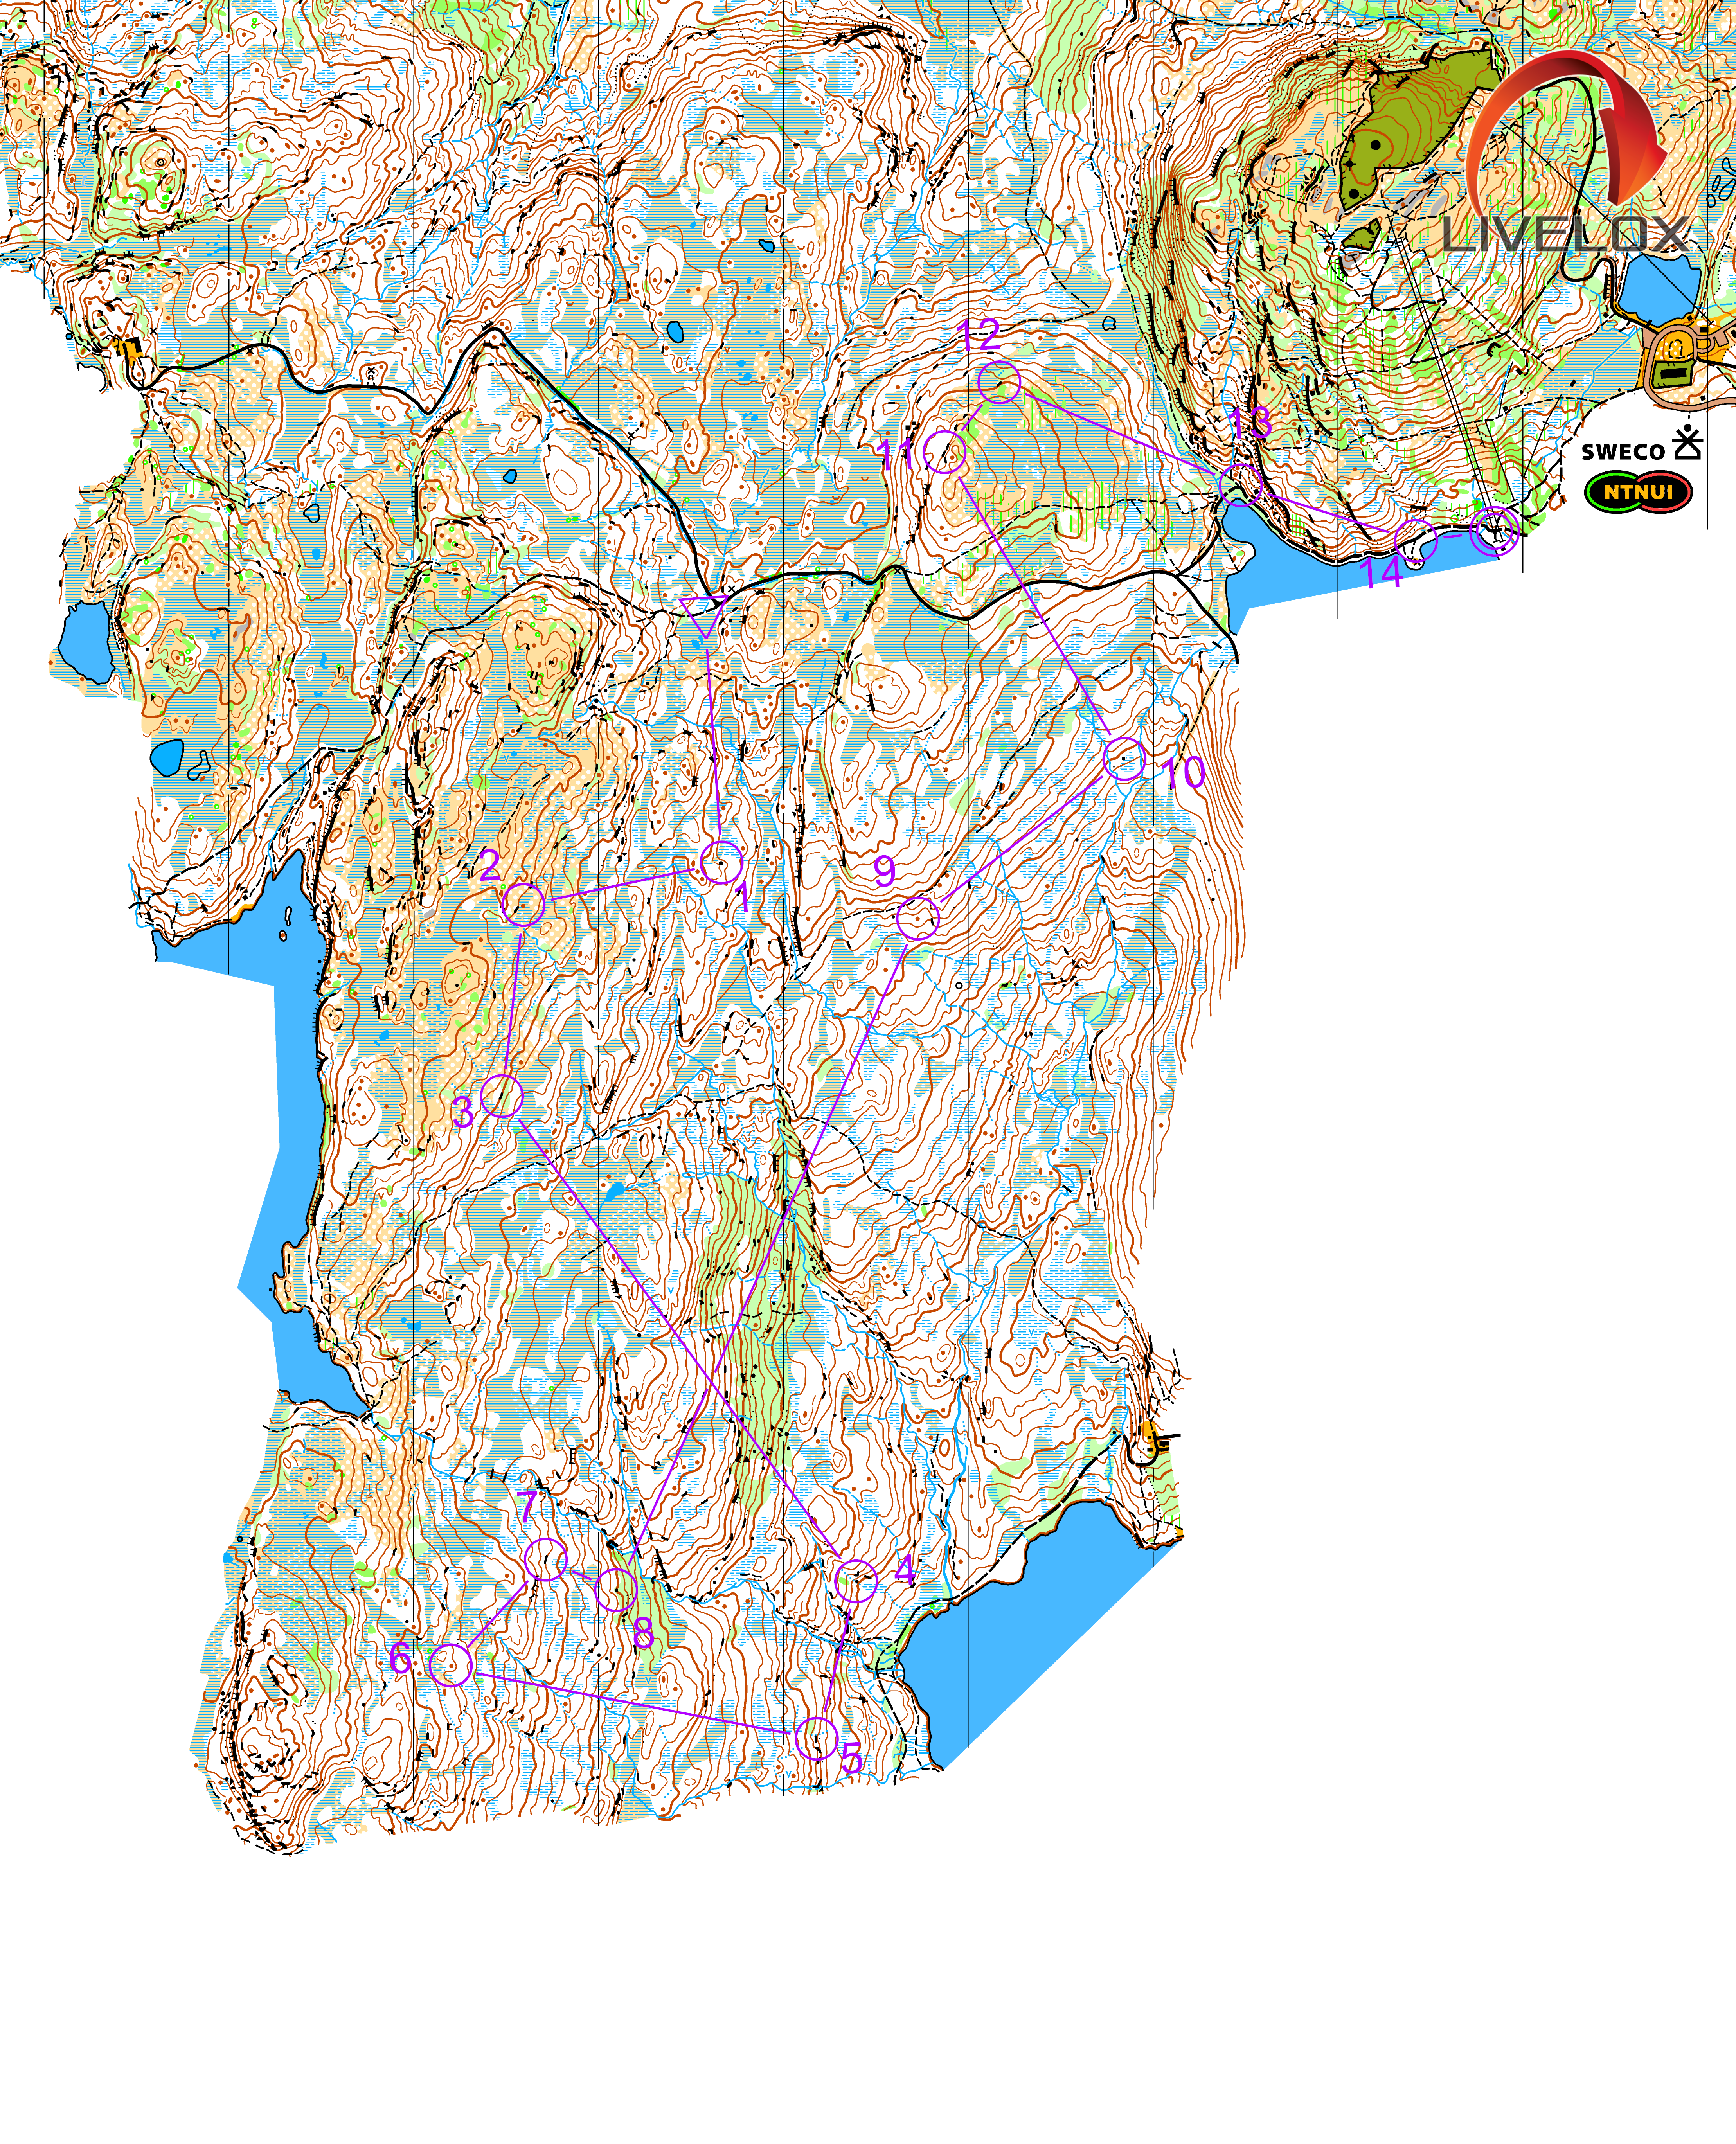 Tour de Trondheim - KM Lang (2019-09-07)